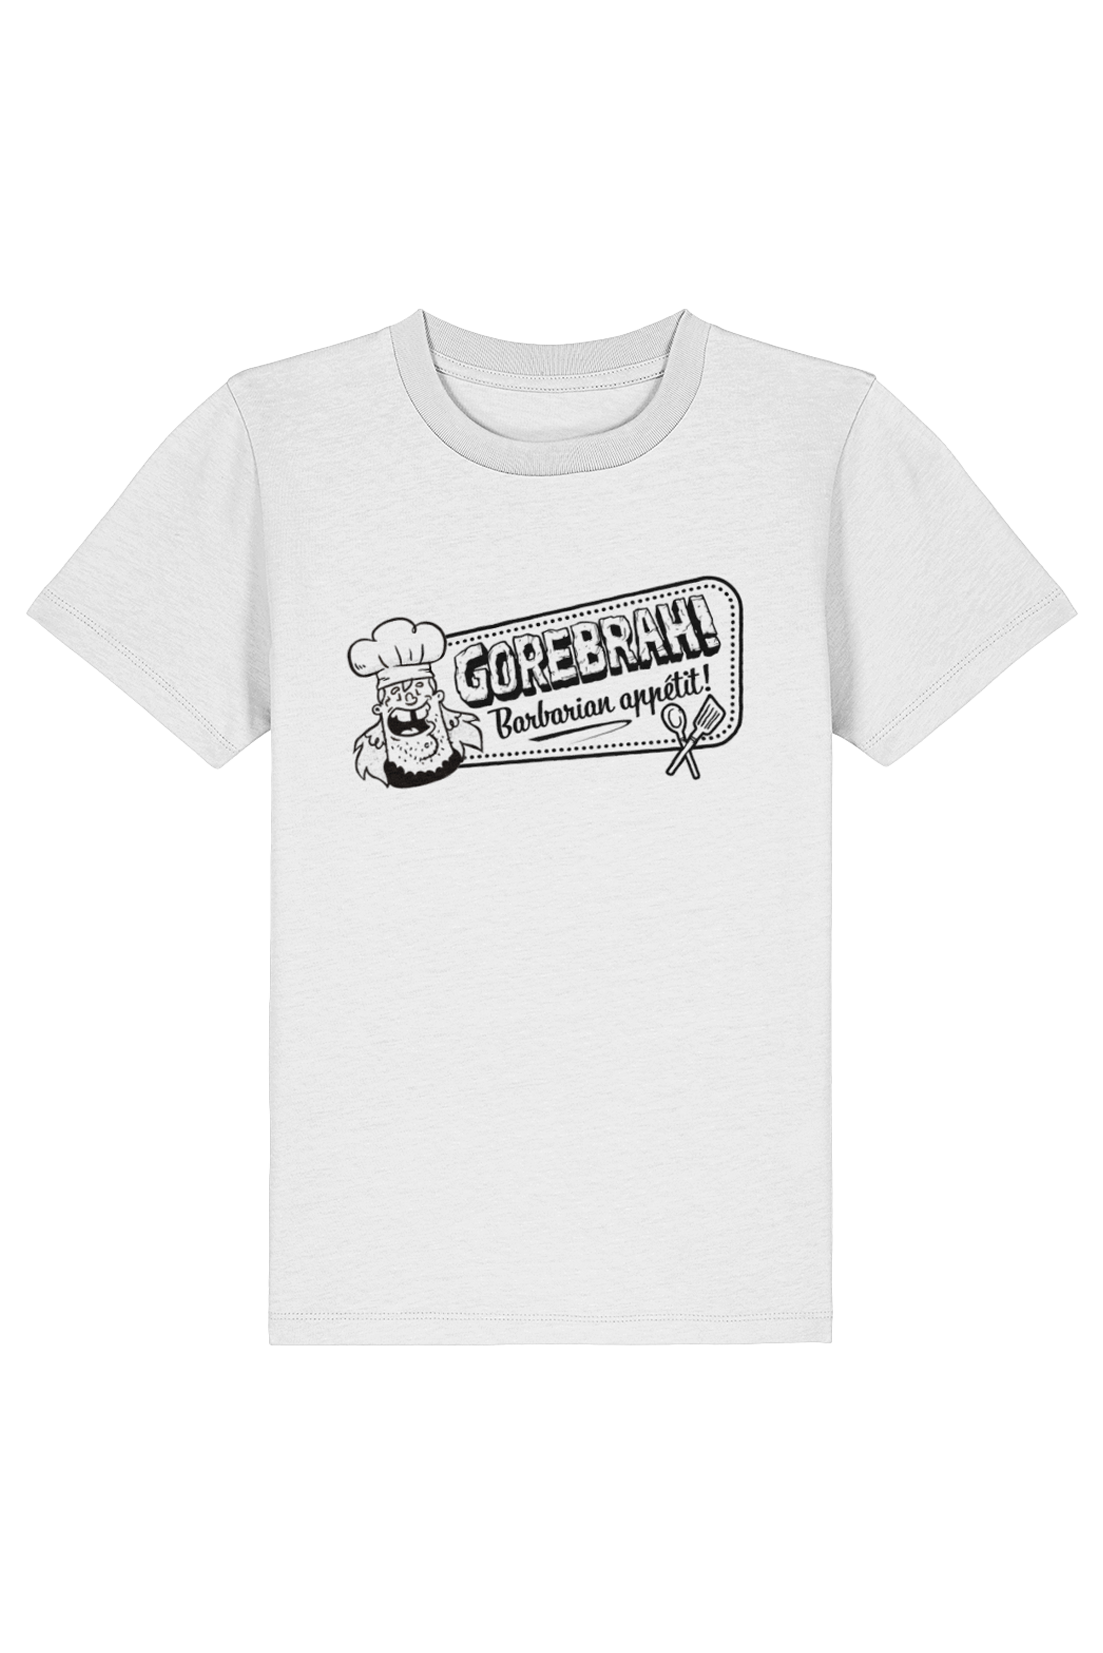 Gorebrah Barbarian Chef kids t-shirt